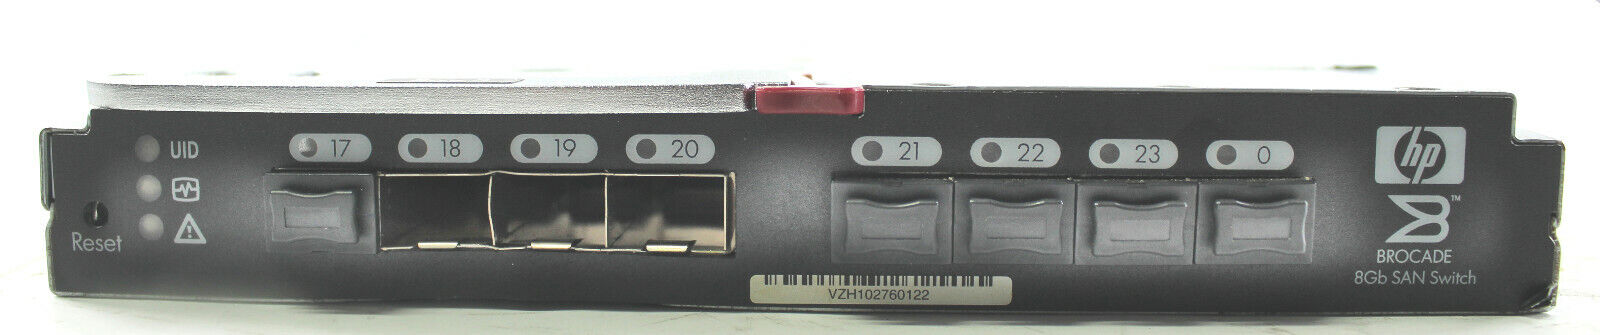 HP Brocade 8Gb SAN AJ820B 12-Ports-Ports Plug-in Module Switch Managed